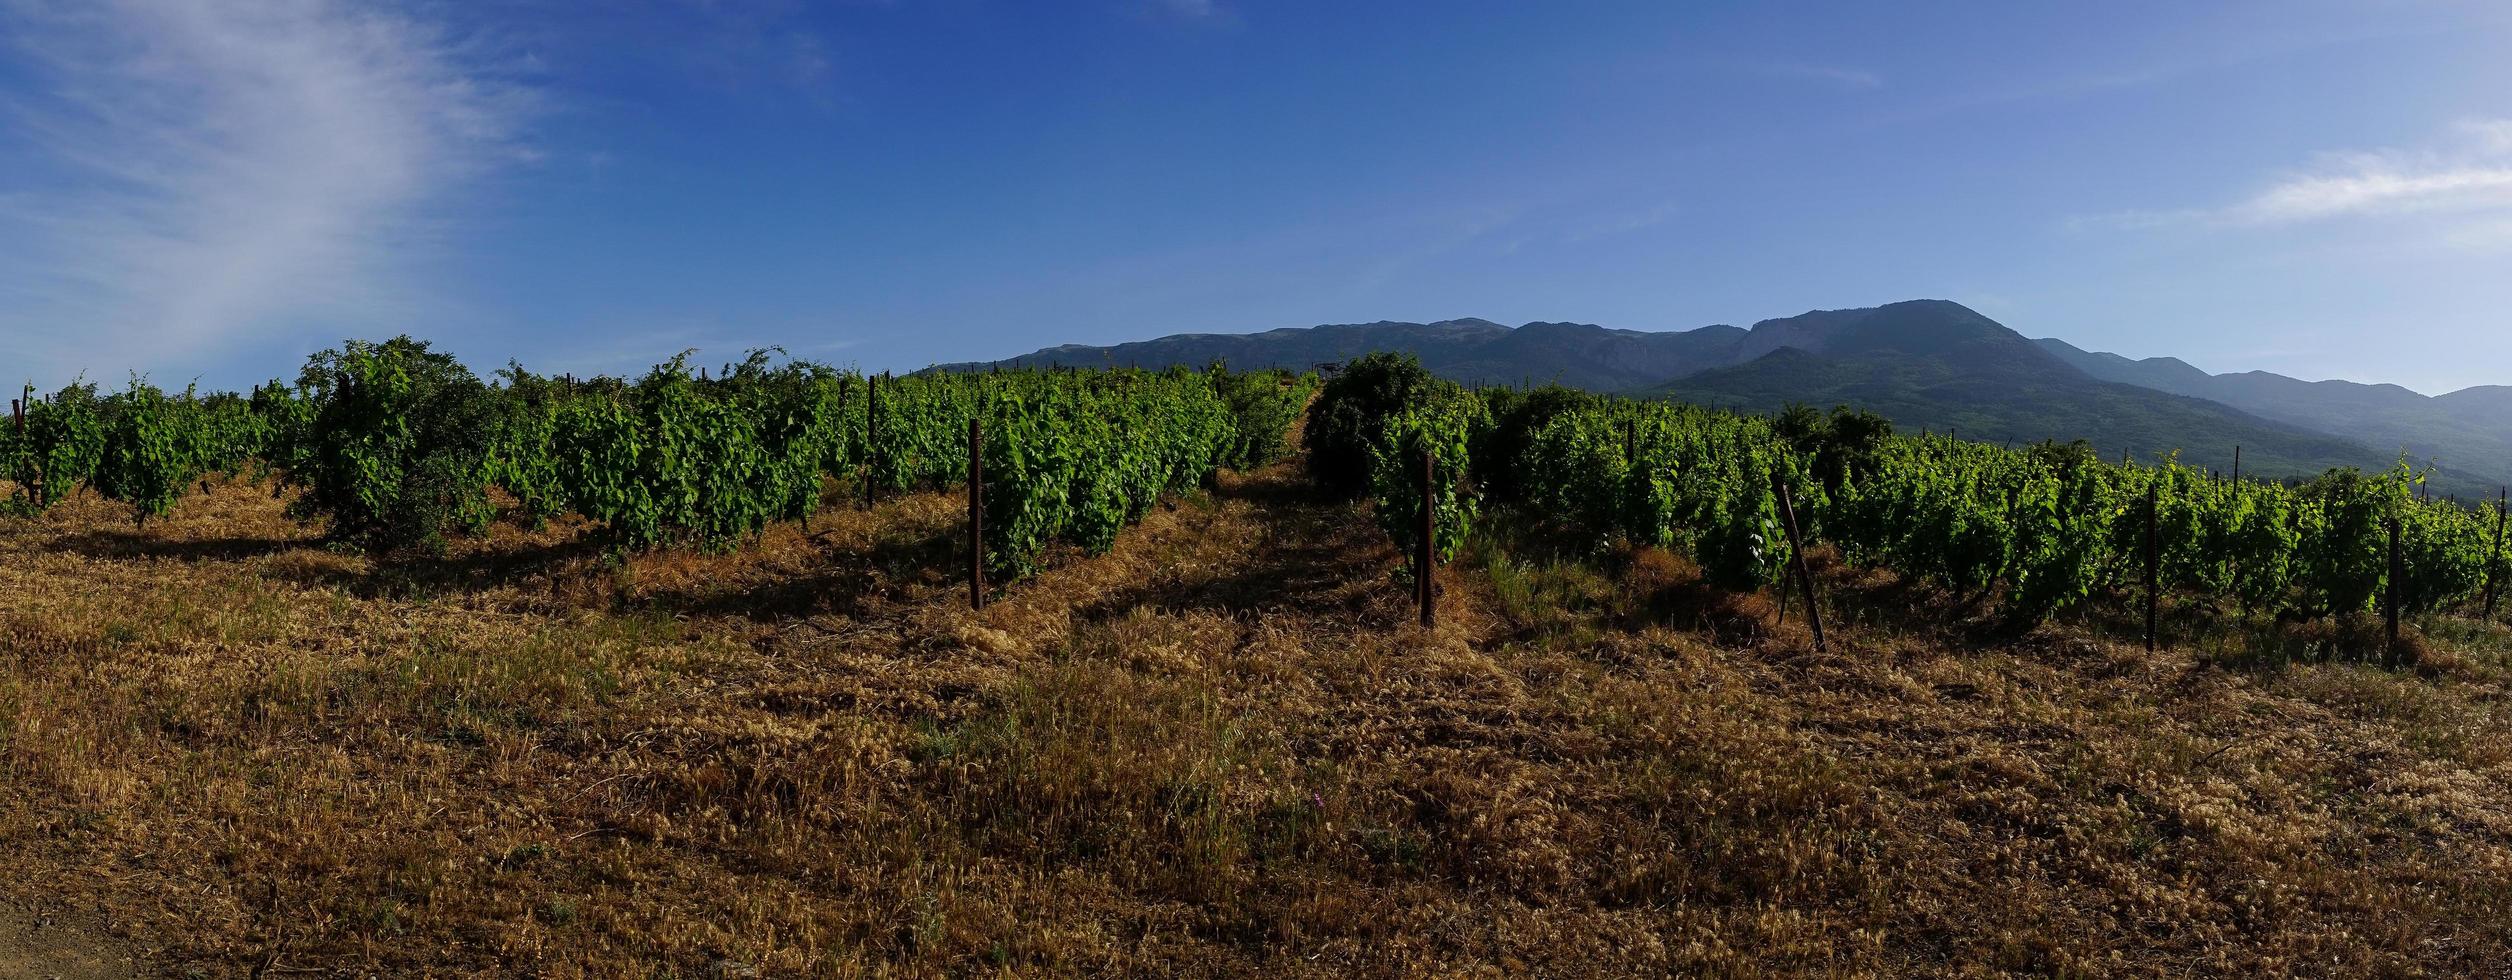 el paisaje natural de los viñedos de Crimea. foto